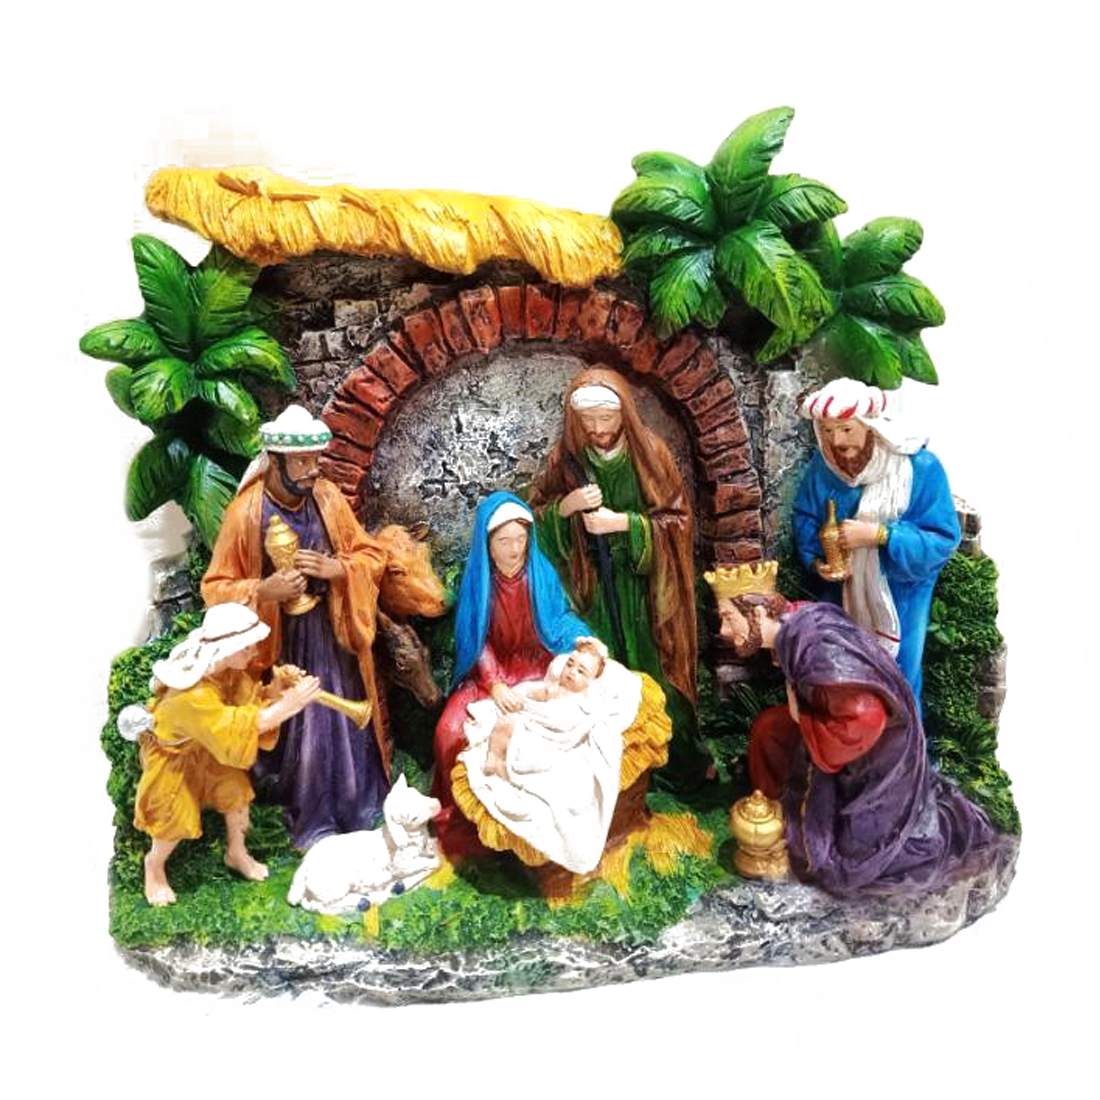 Shop for a belen christmas decor set for your Nativity scene